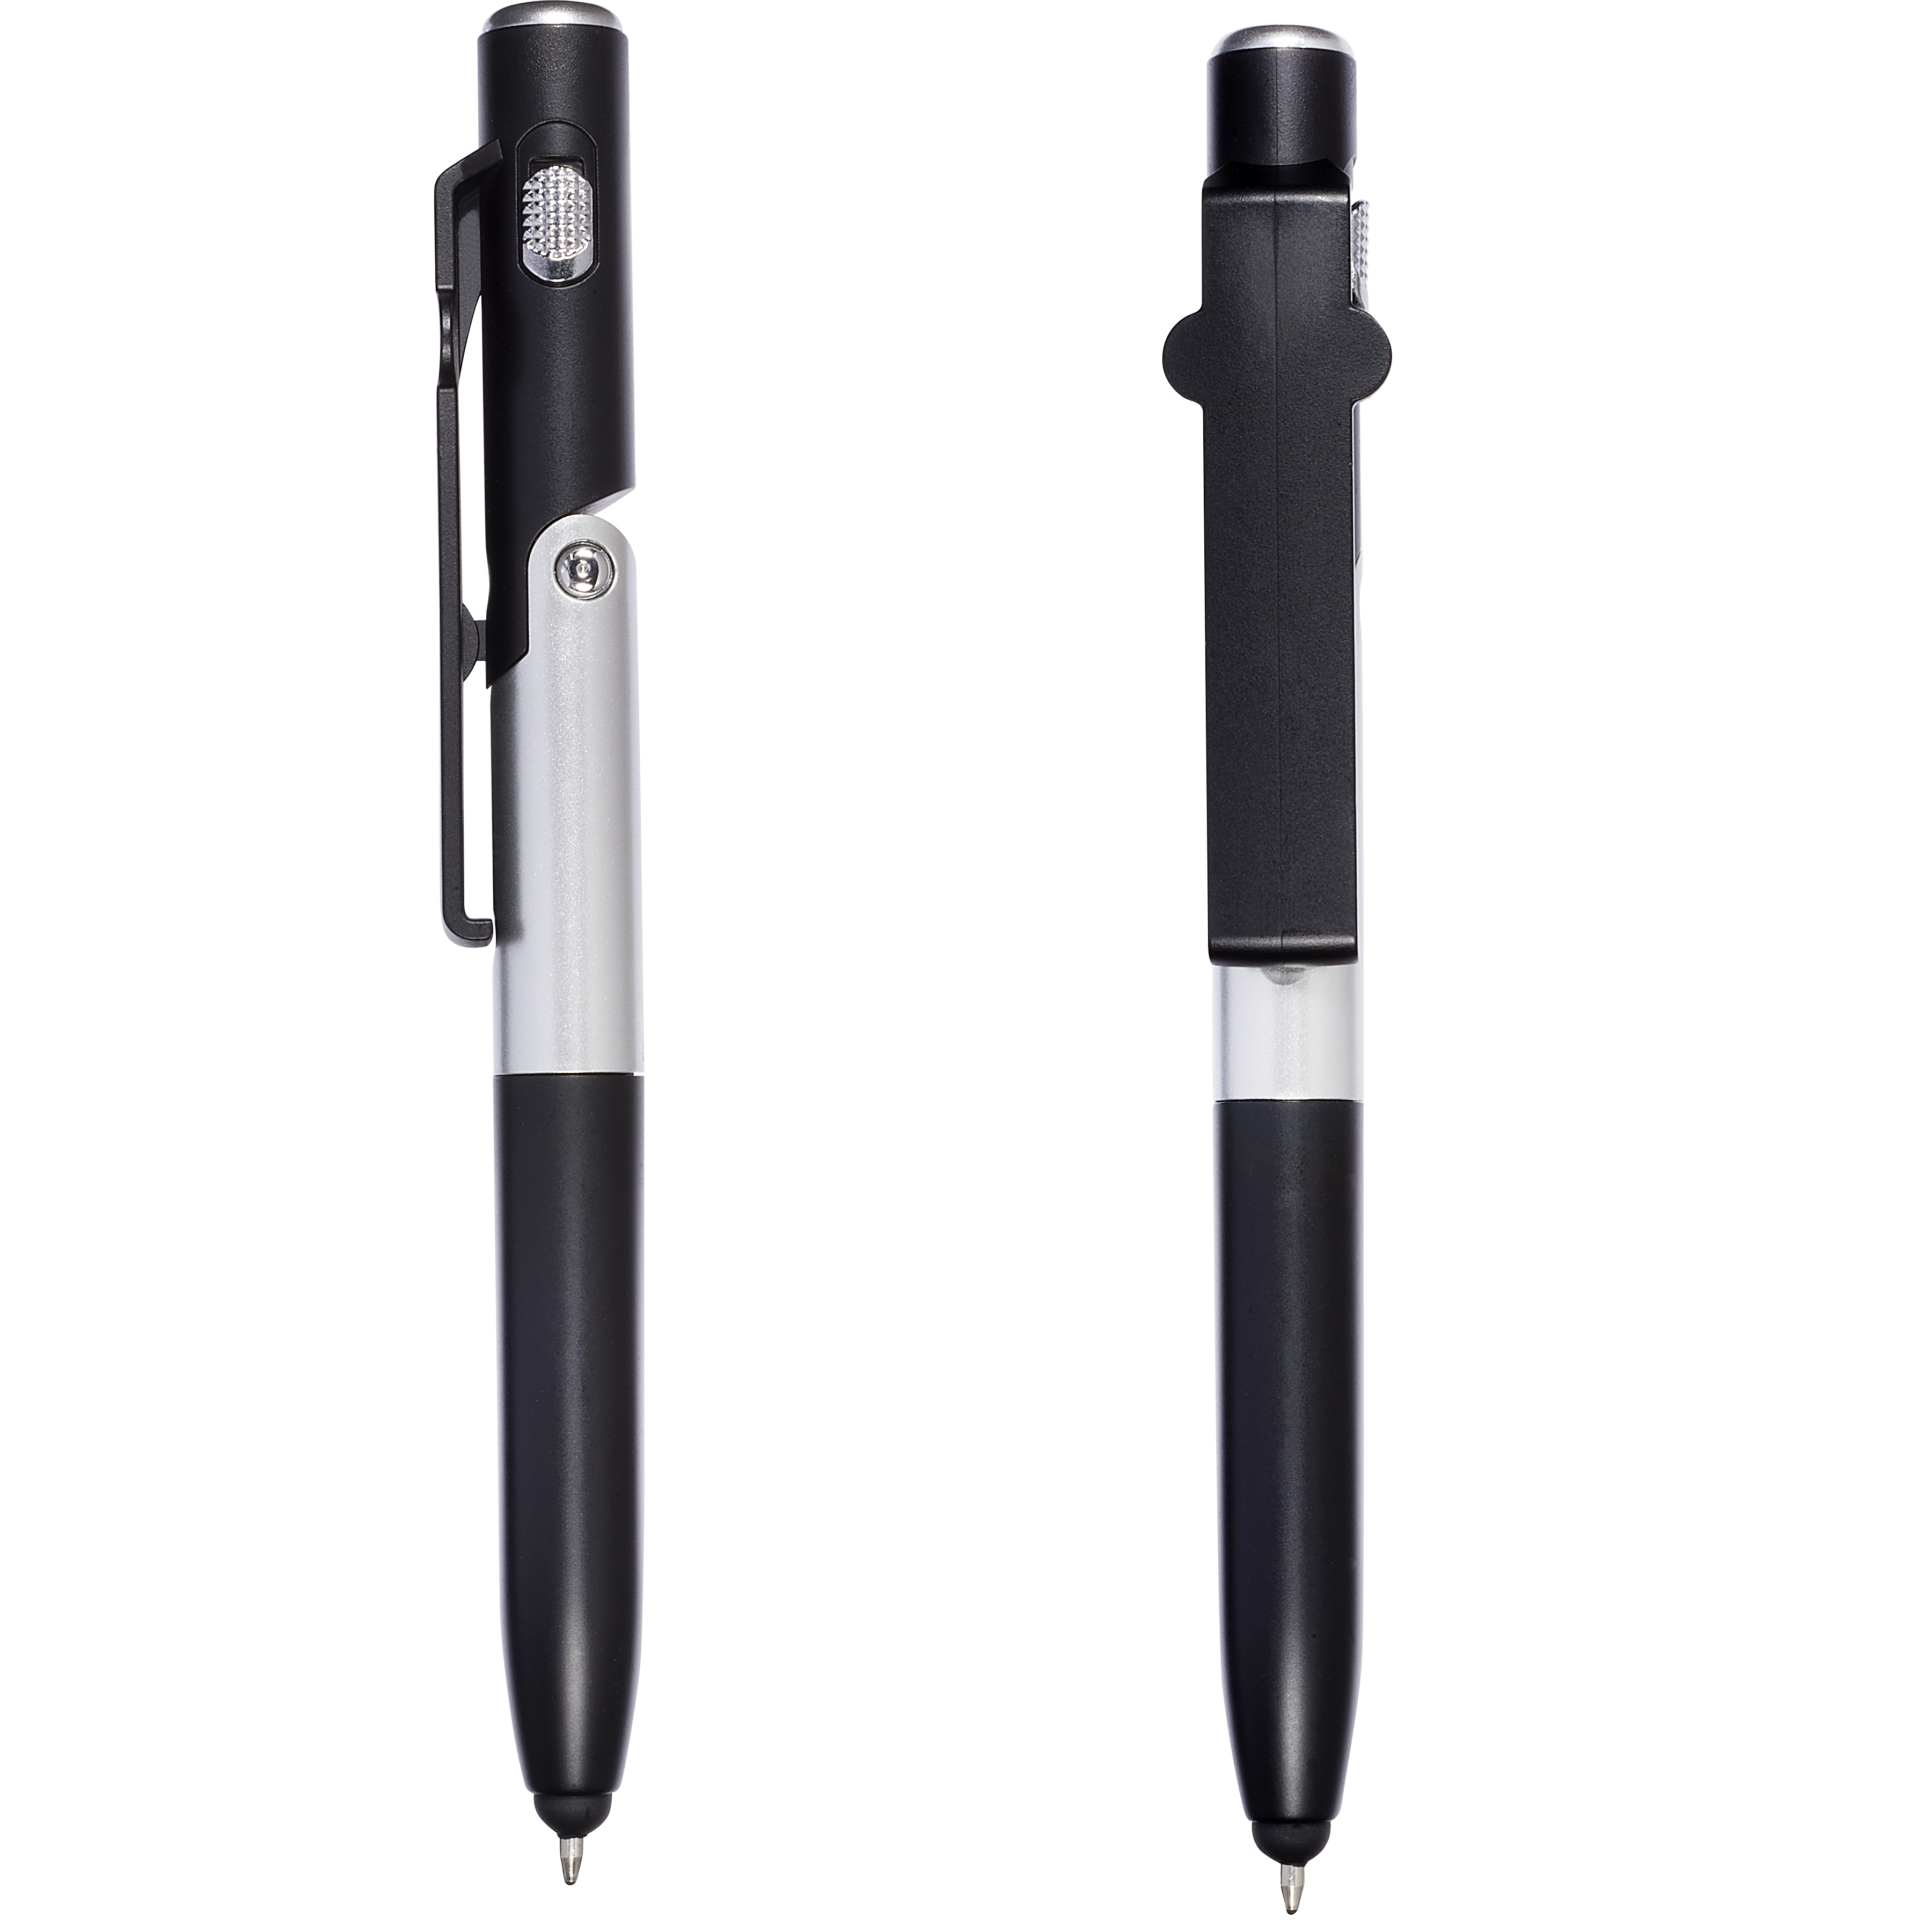 4-in-1 Multi-Purpose Stylus Pen